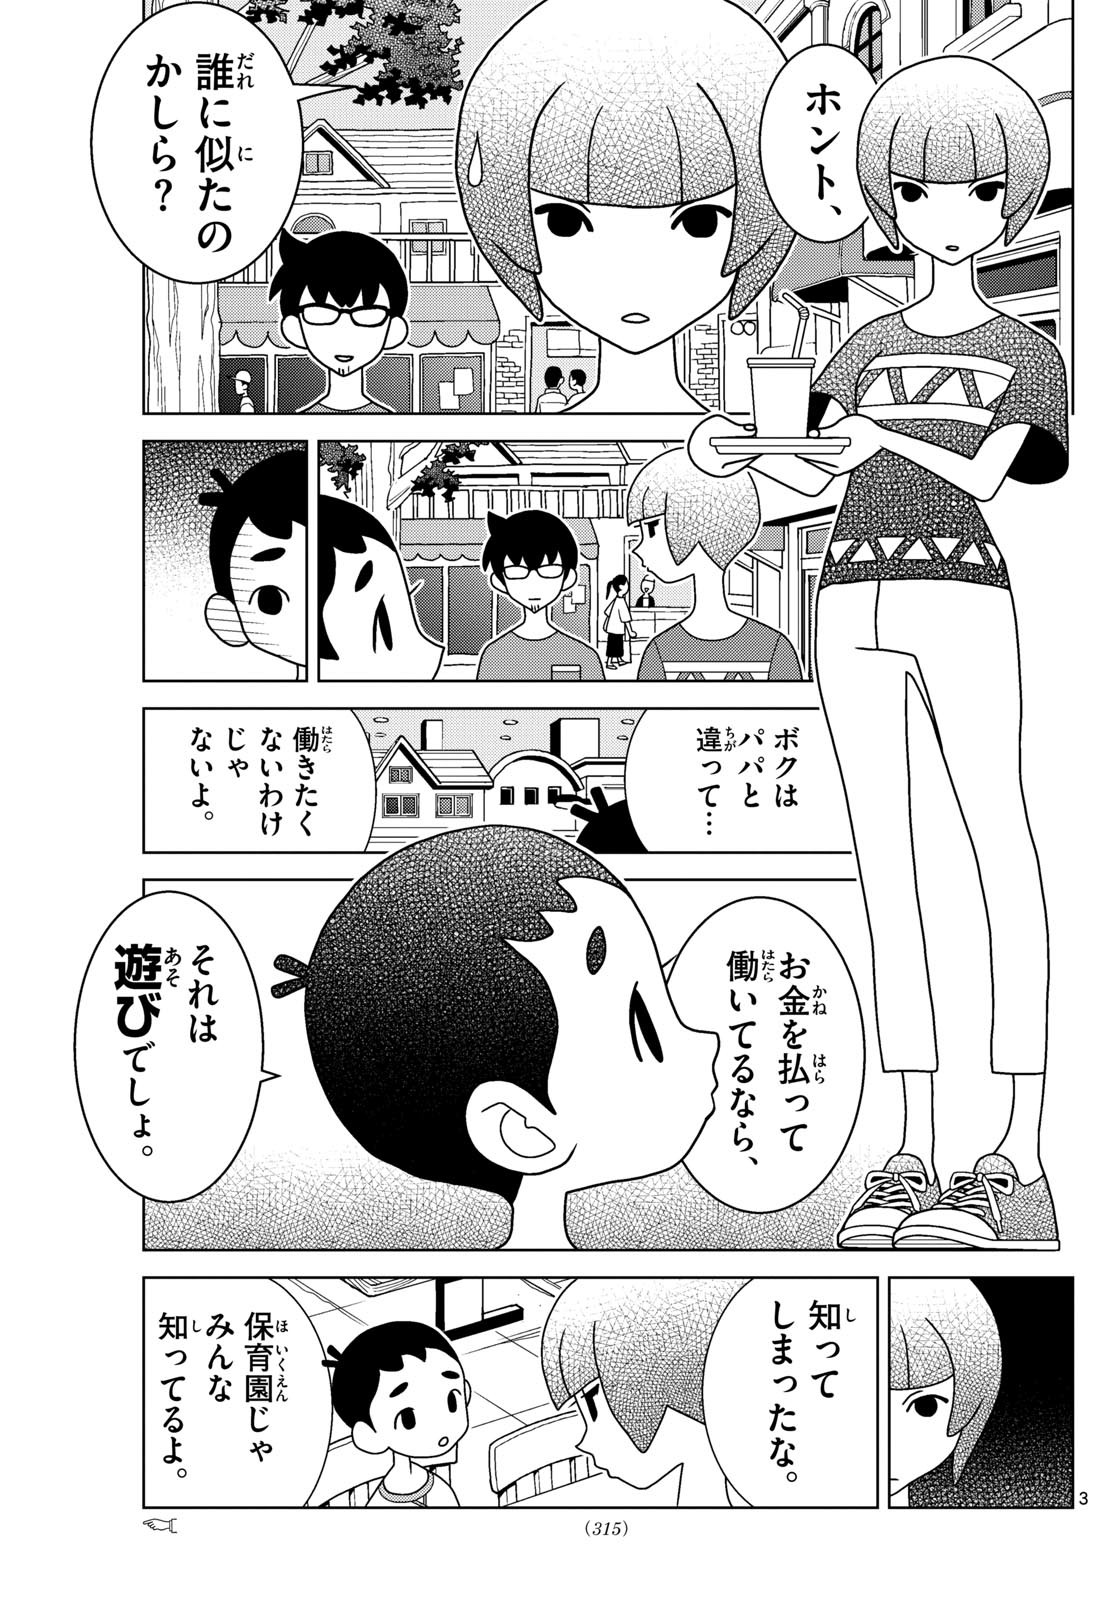 Shibuya Near Family - Chapter 066 - Page 3